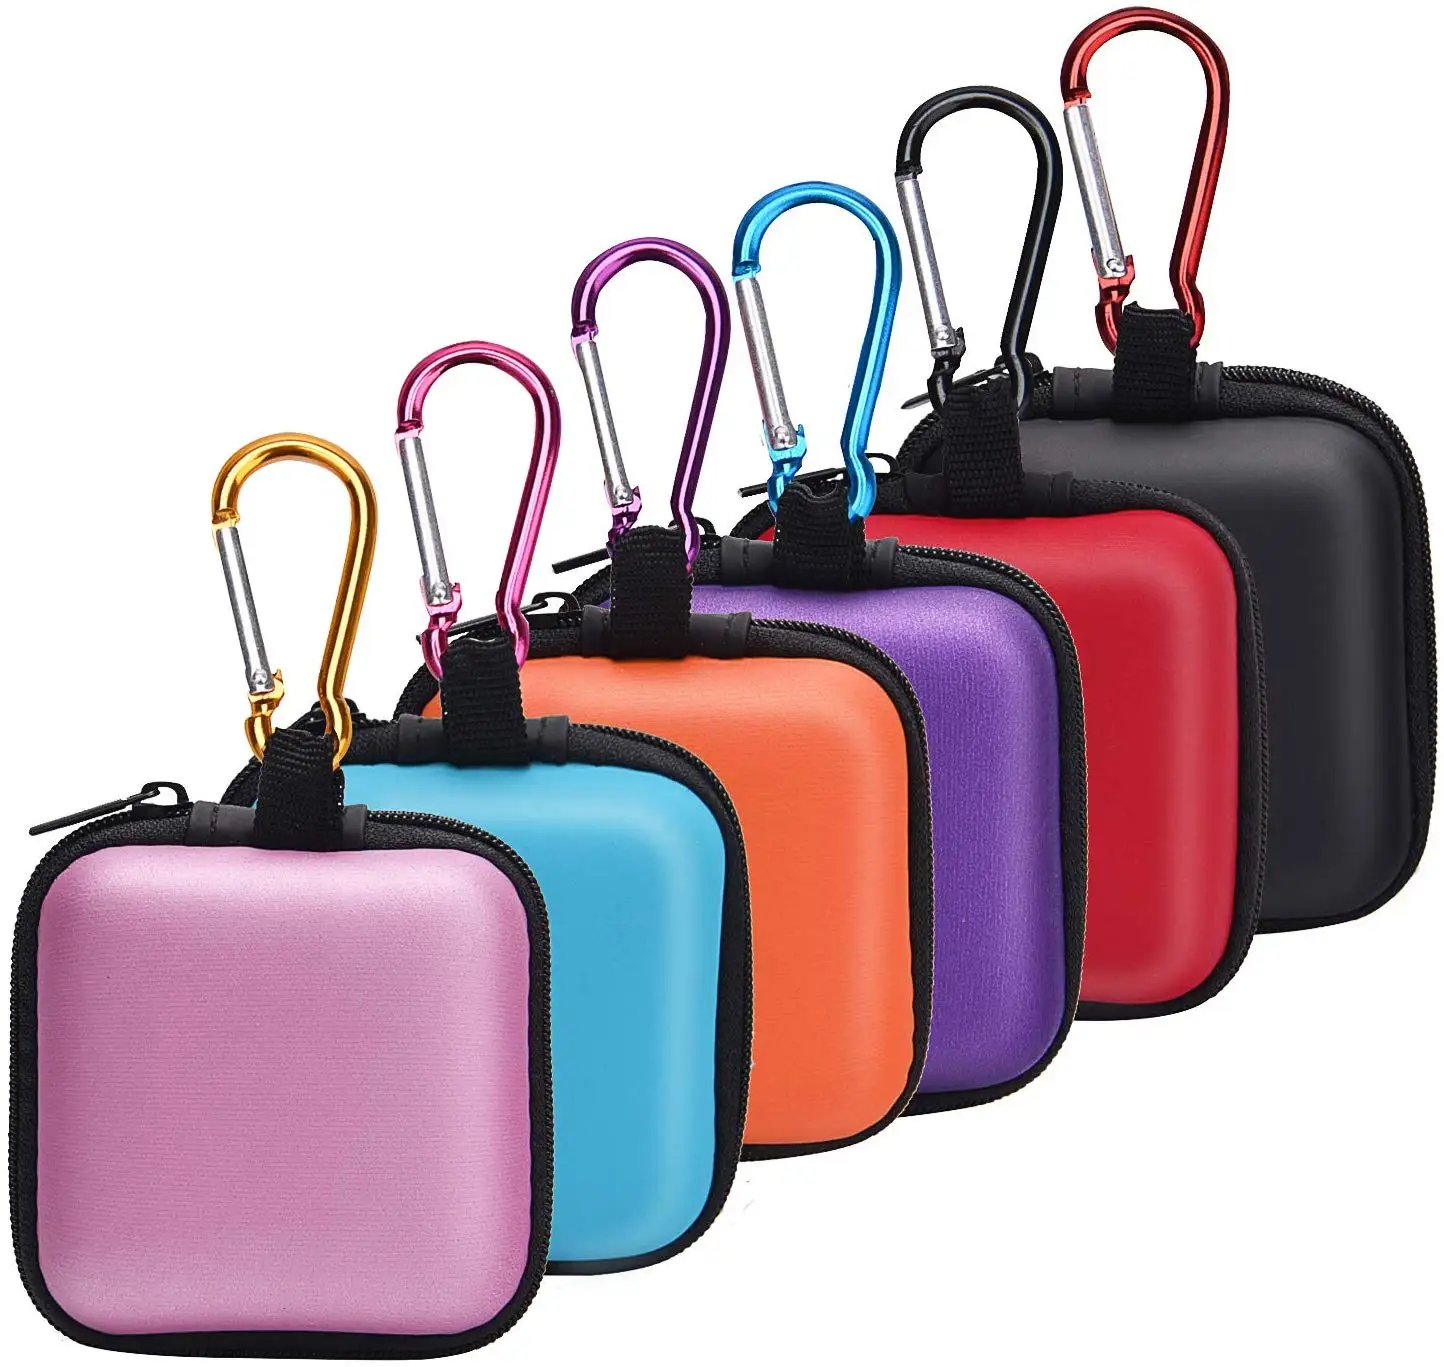 

Portable wireless headphone carrying Hard Storage case eva bag multipurpose travel earphone case, Pink,blue,purple,